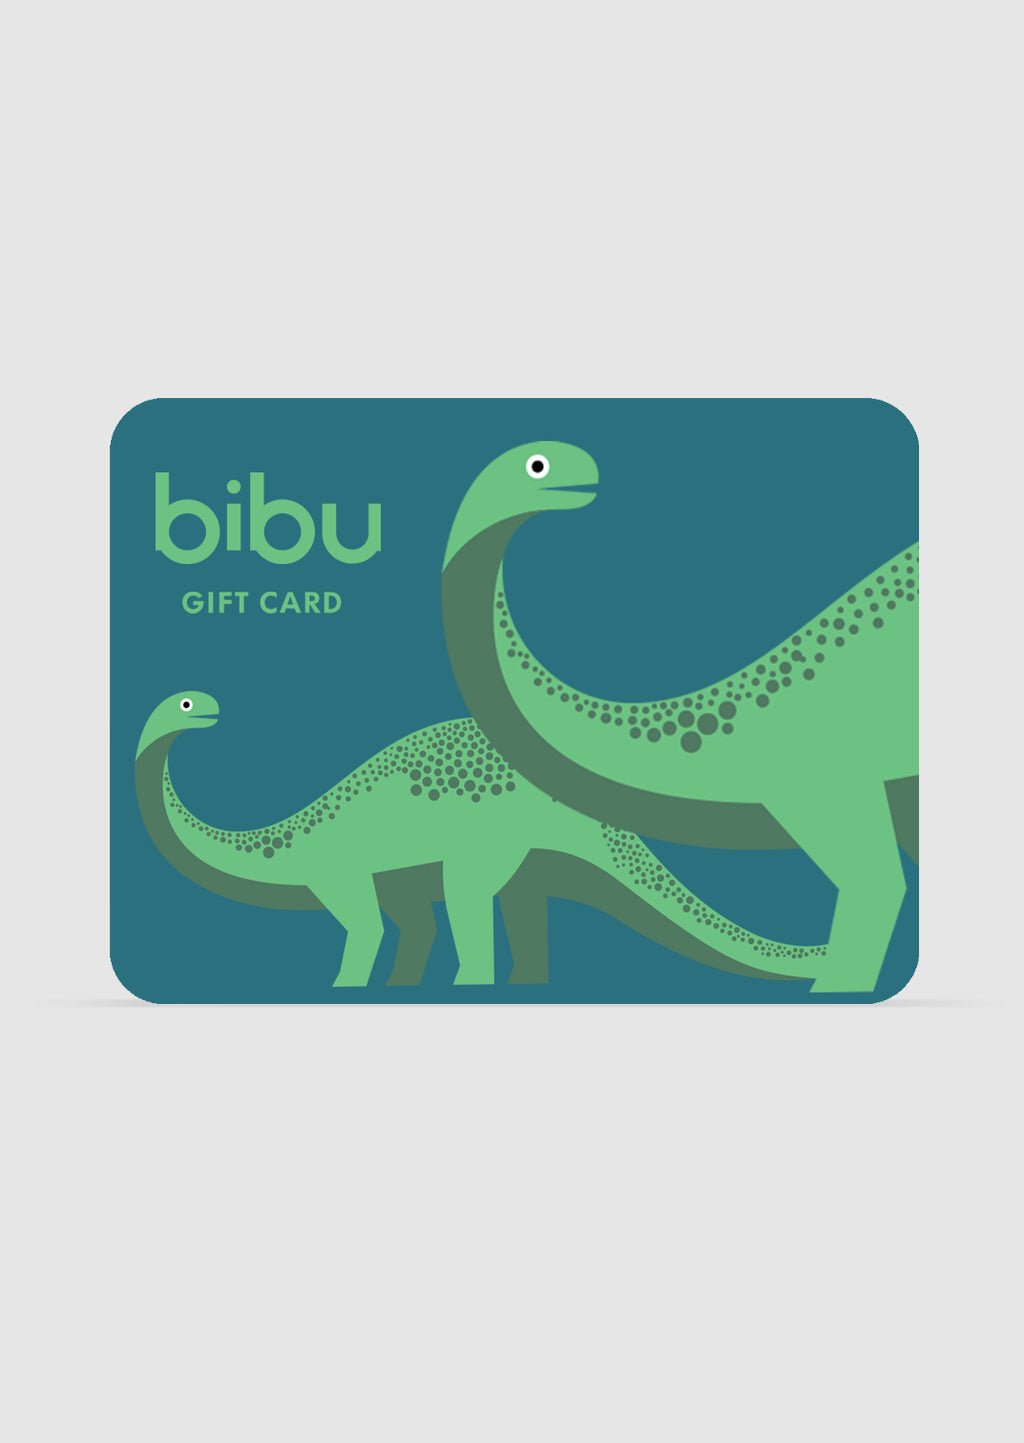 Bibu gift card